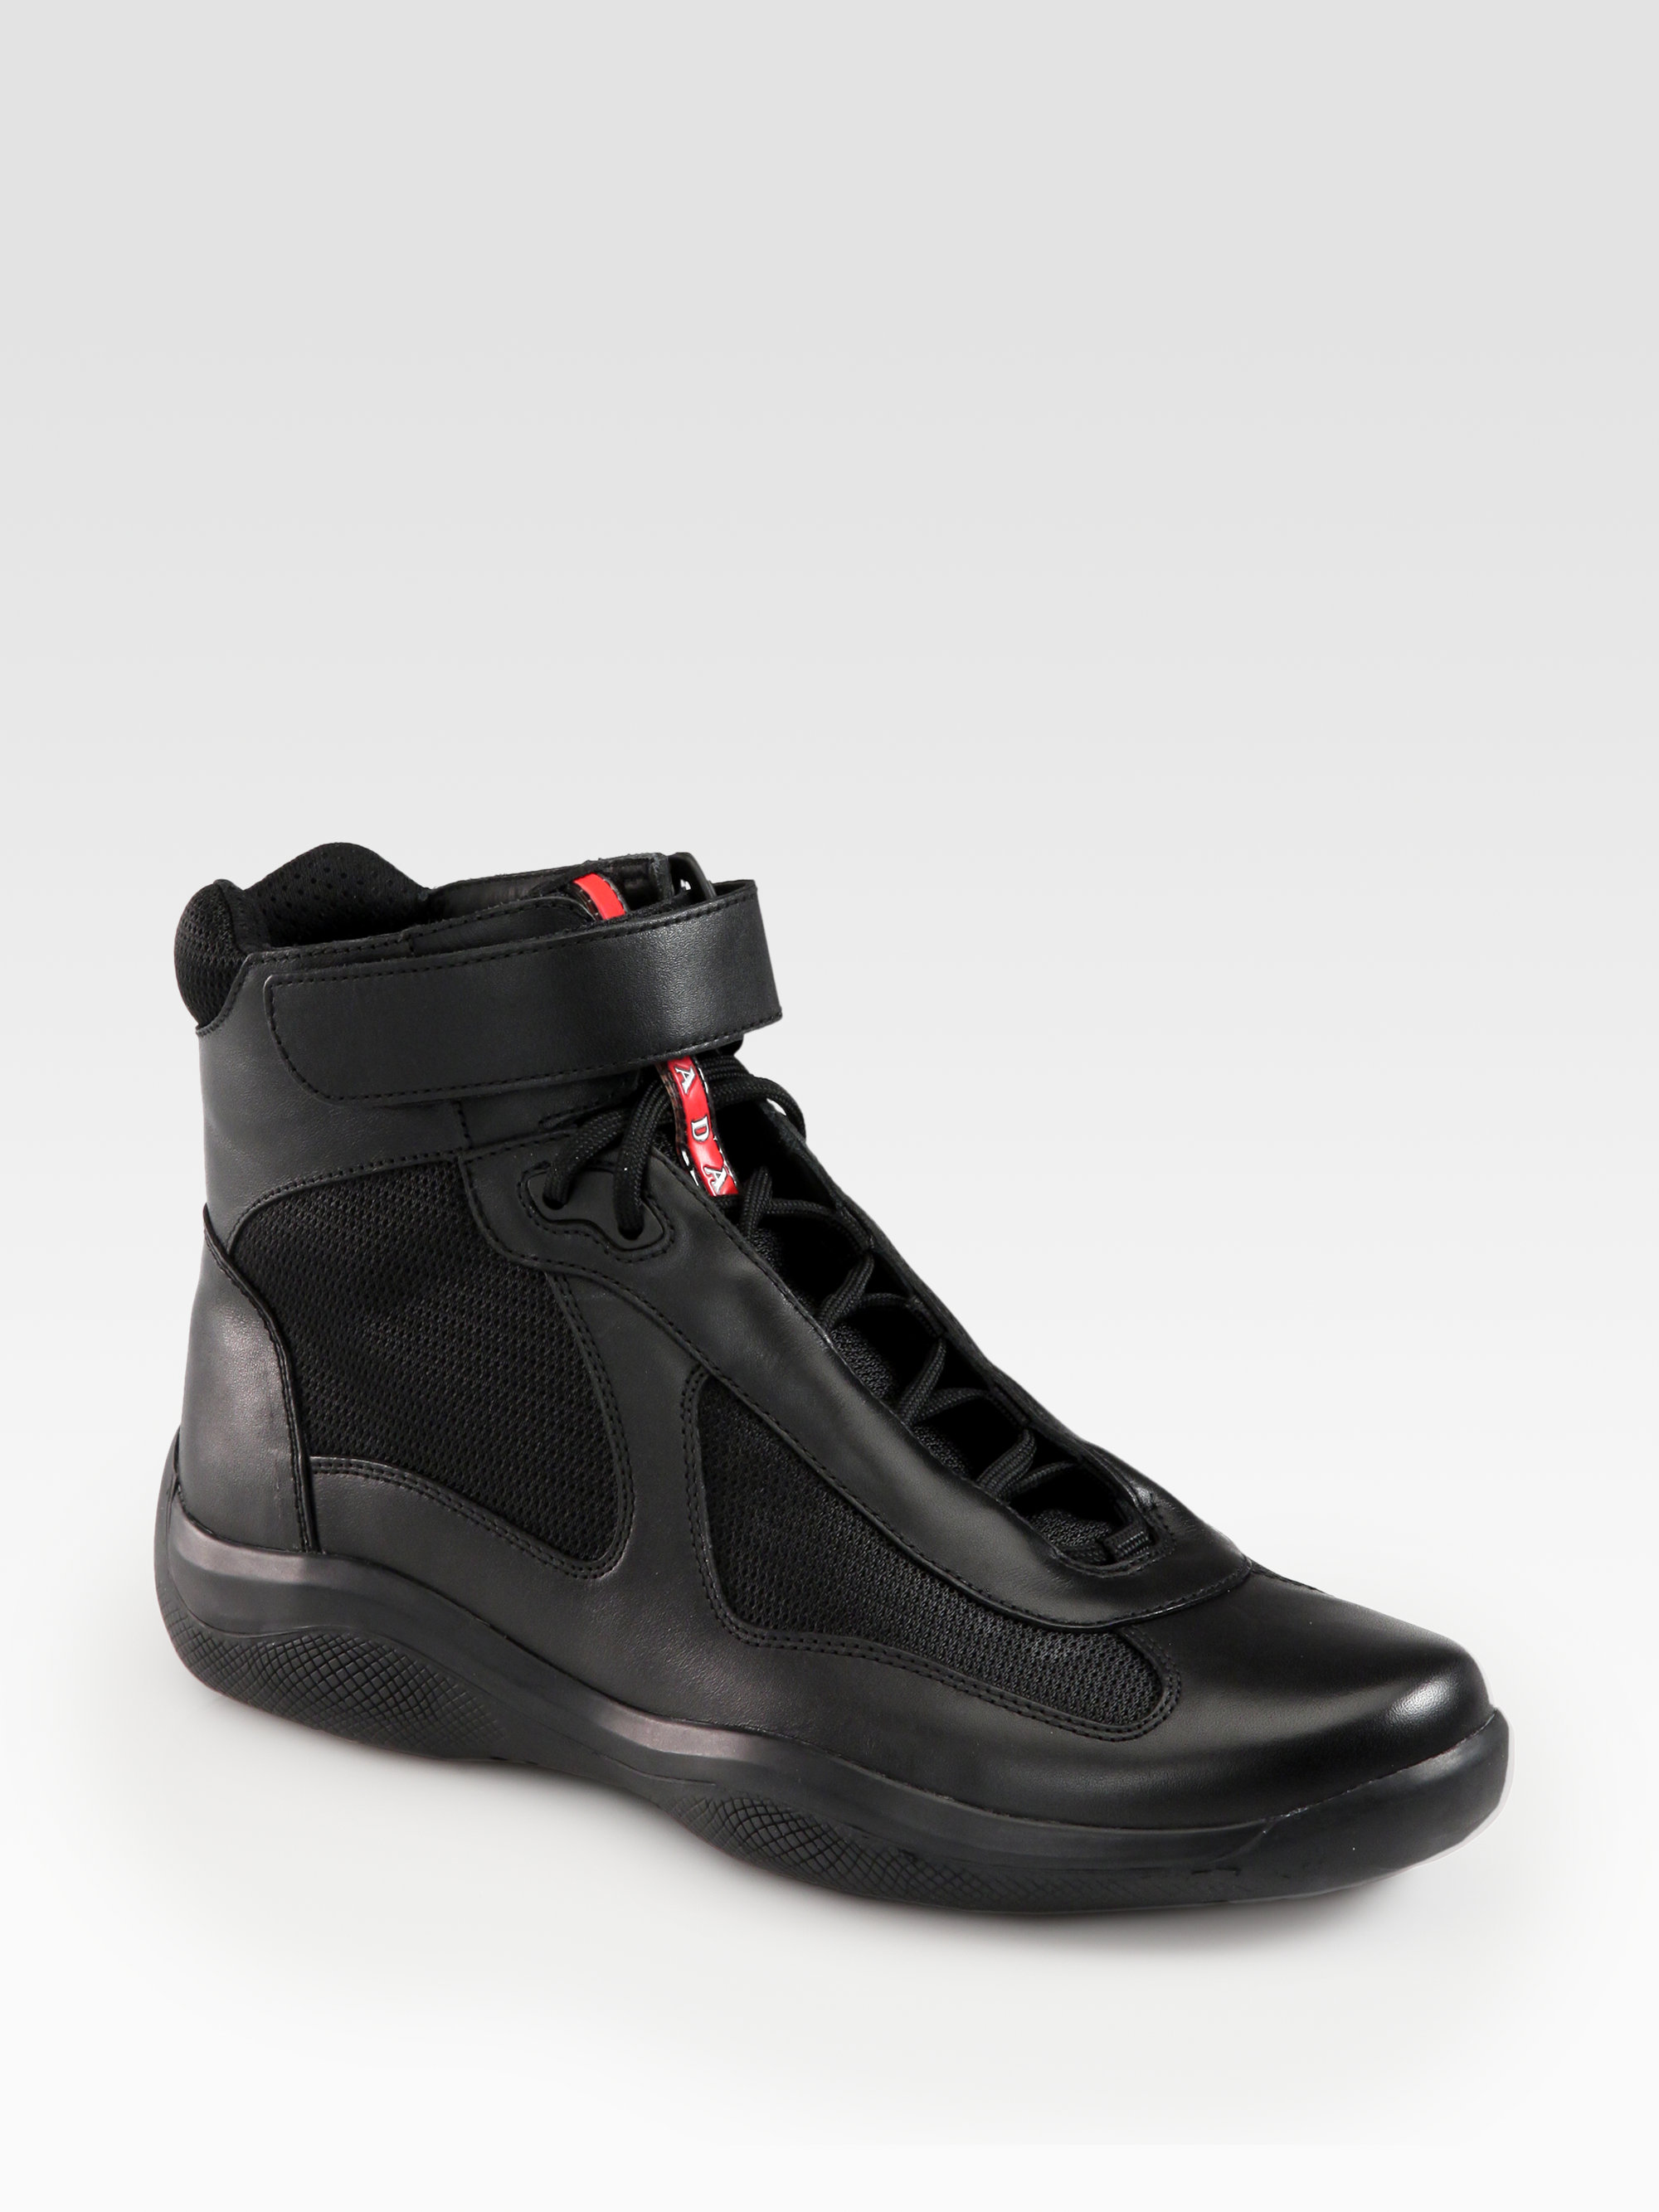 Prada High Top Leather Sneakers In Black For Men Lyst